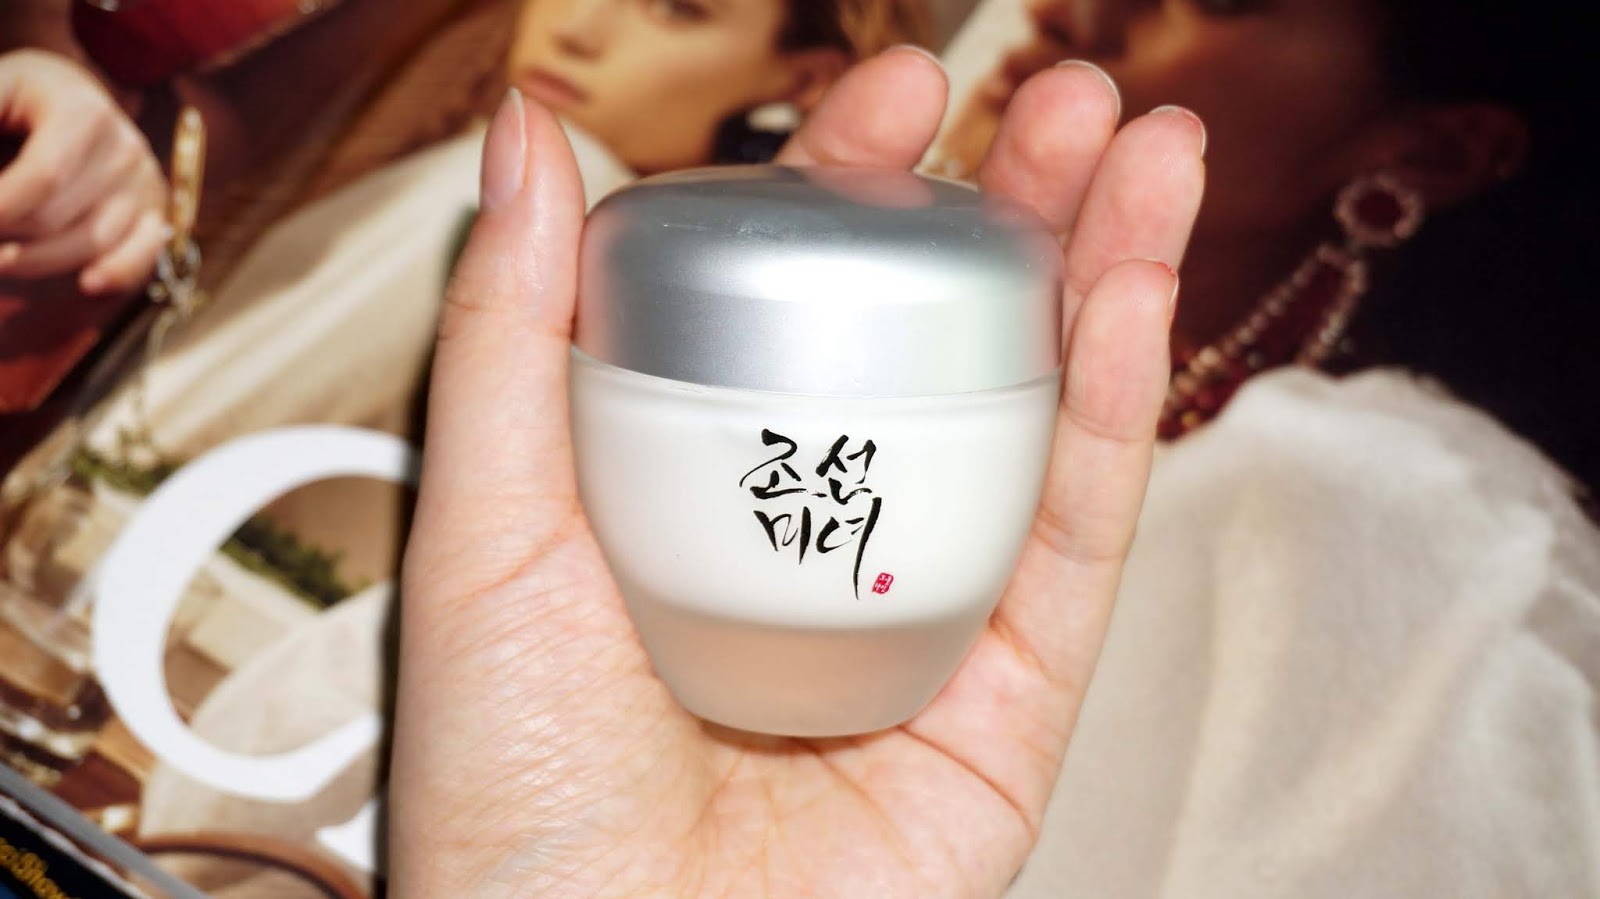 Review: Beauty of Joseon Dynasty Cream; a Hidden Gem - Snow White